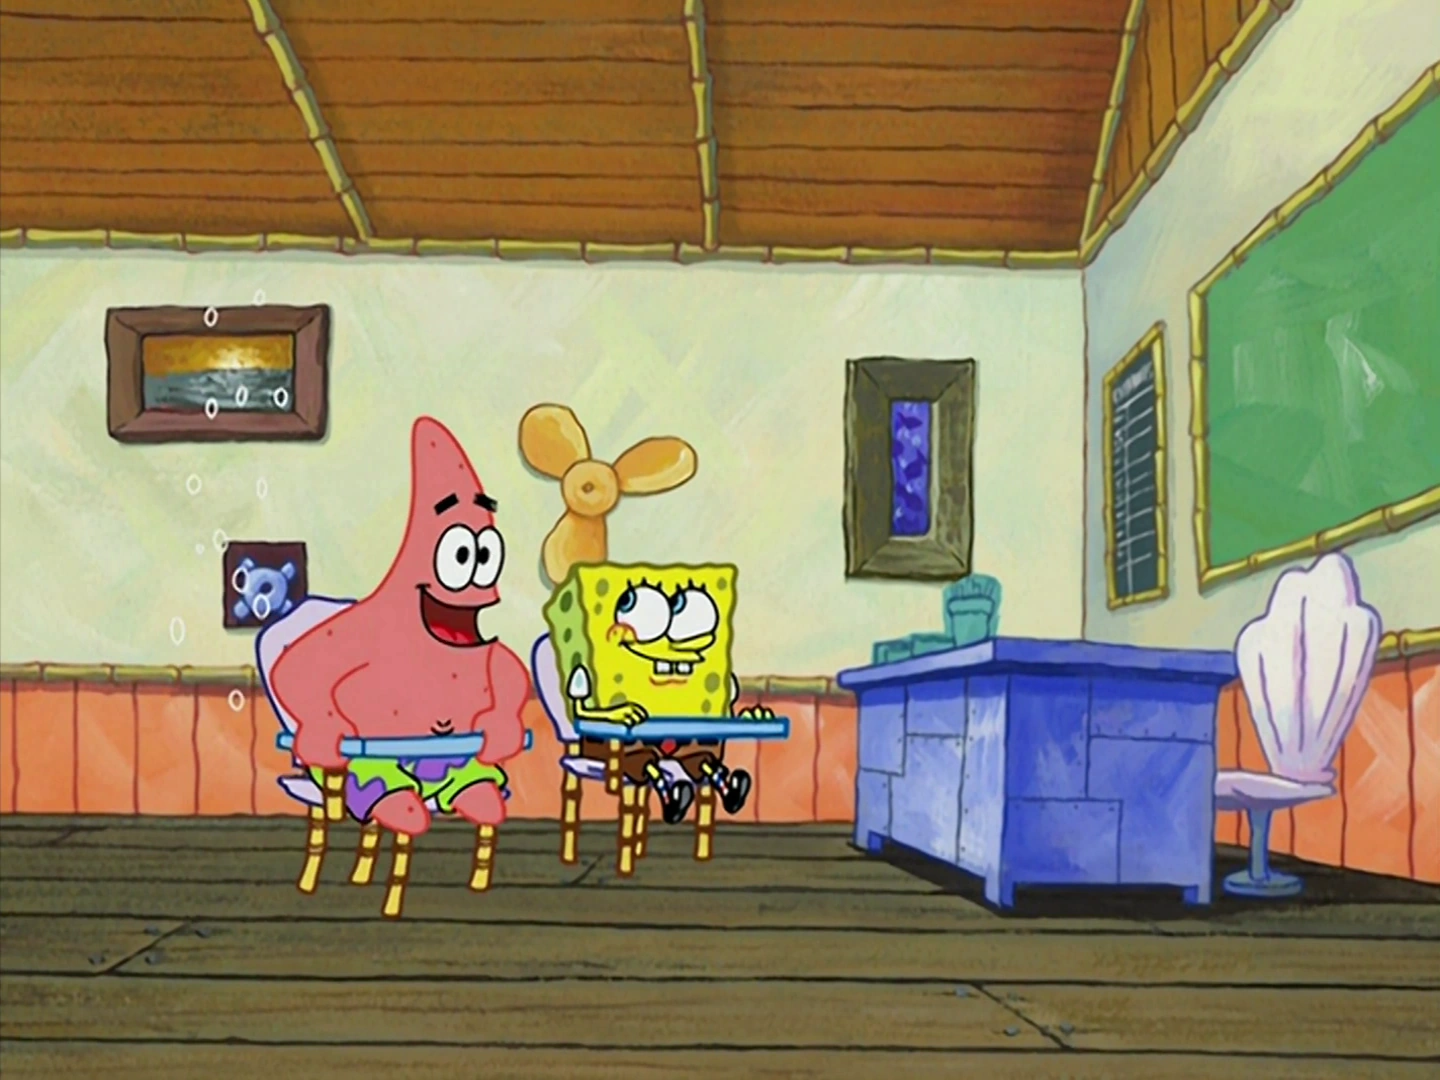 spongebob and patrick fighting boating school